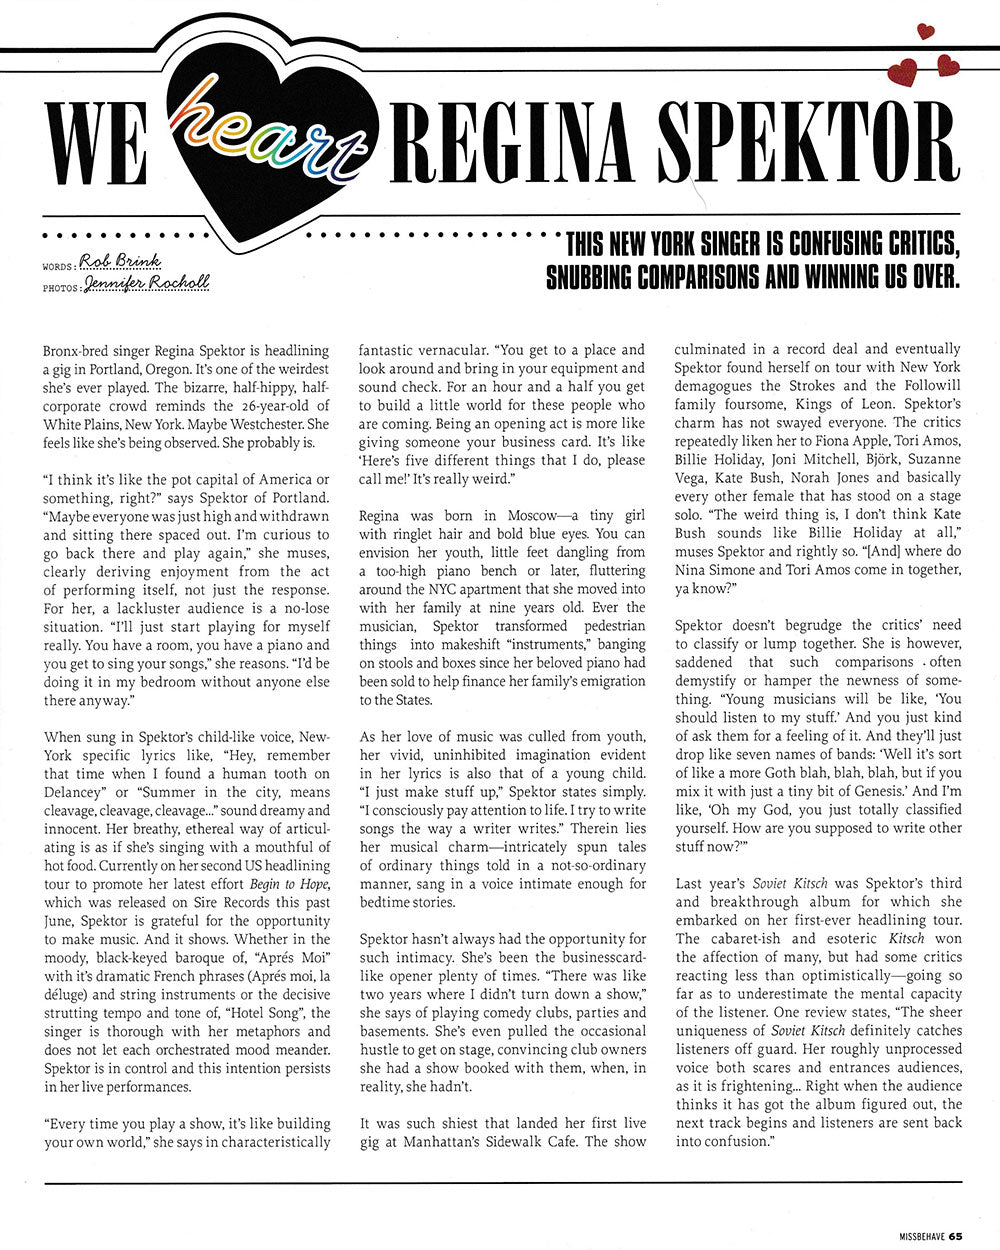 regina spektor robert brink interview